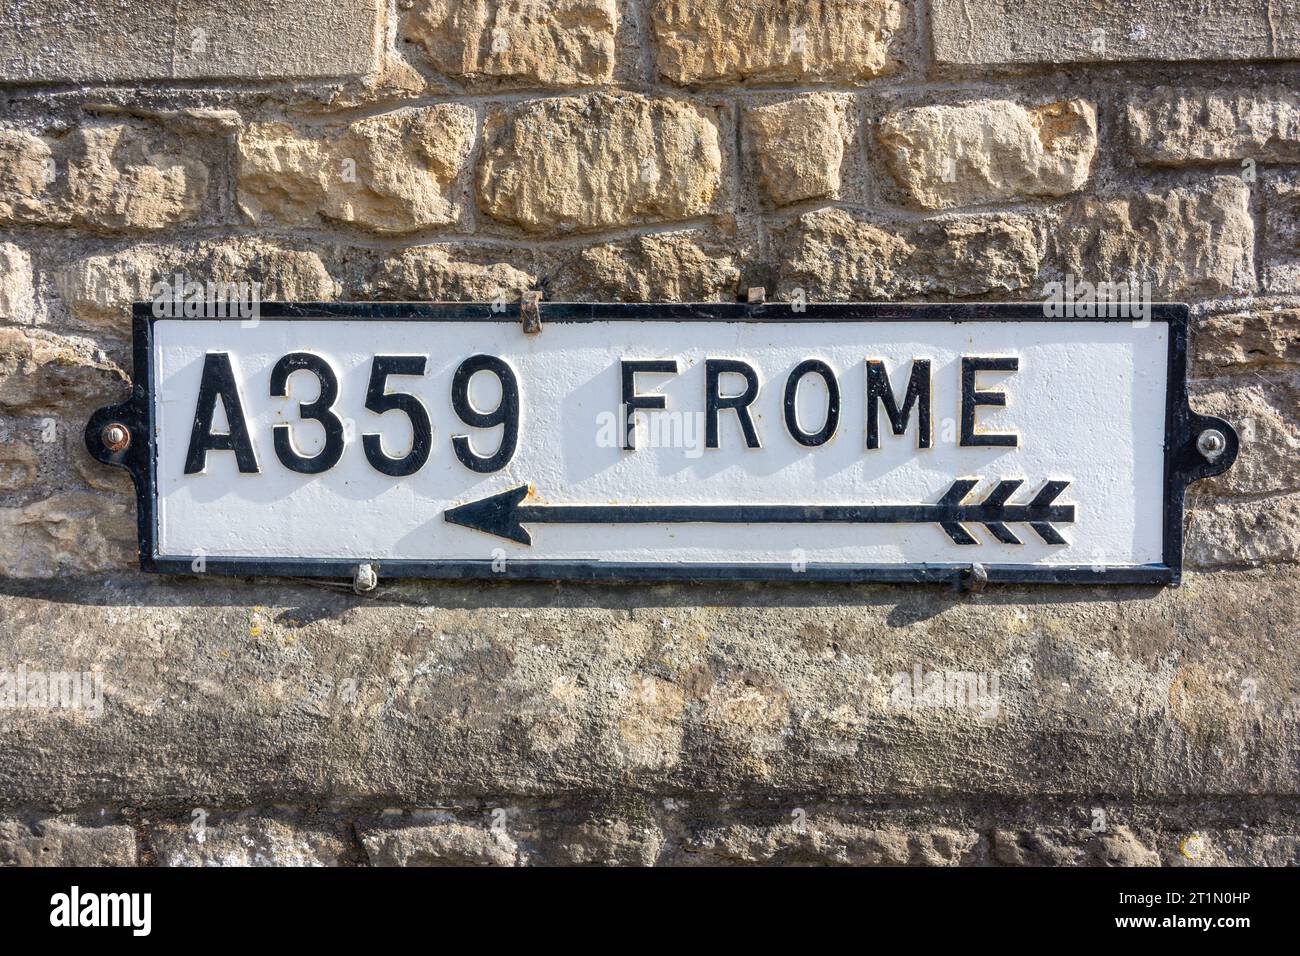 Période Frome panneau routier, Quaperlake Street, Bruton , Somerset, Angleterre, Royaume-Uni Banque D'Images